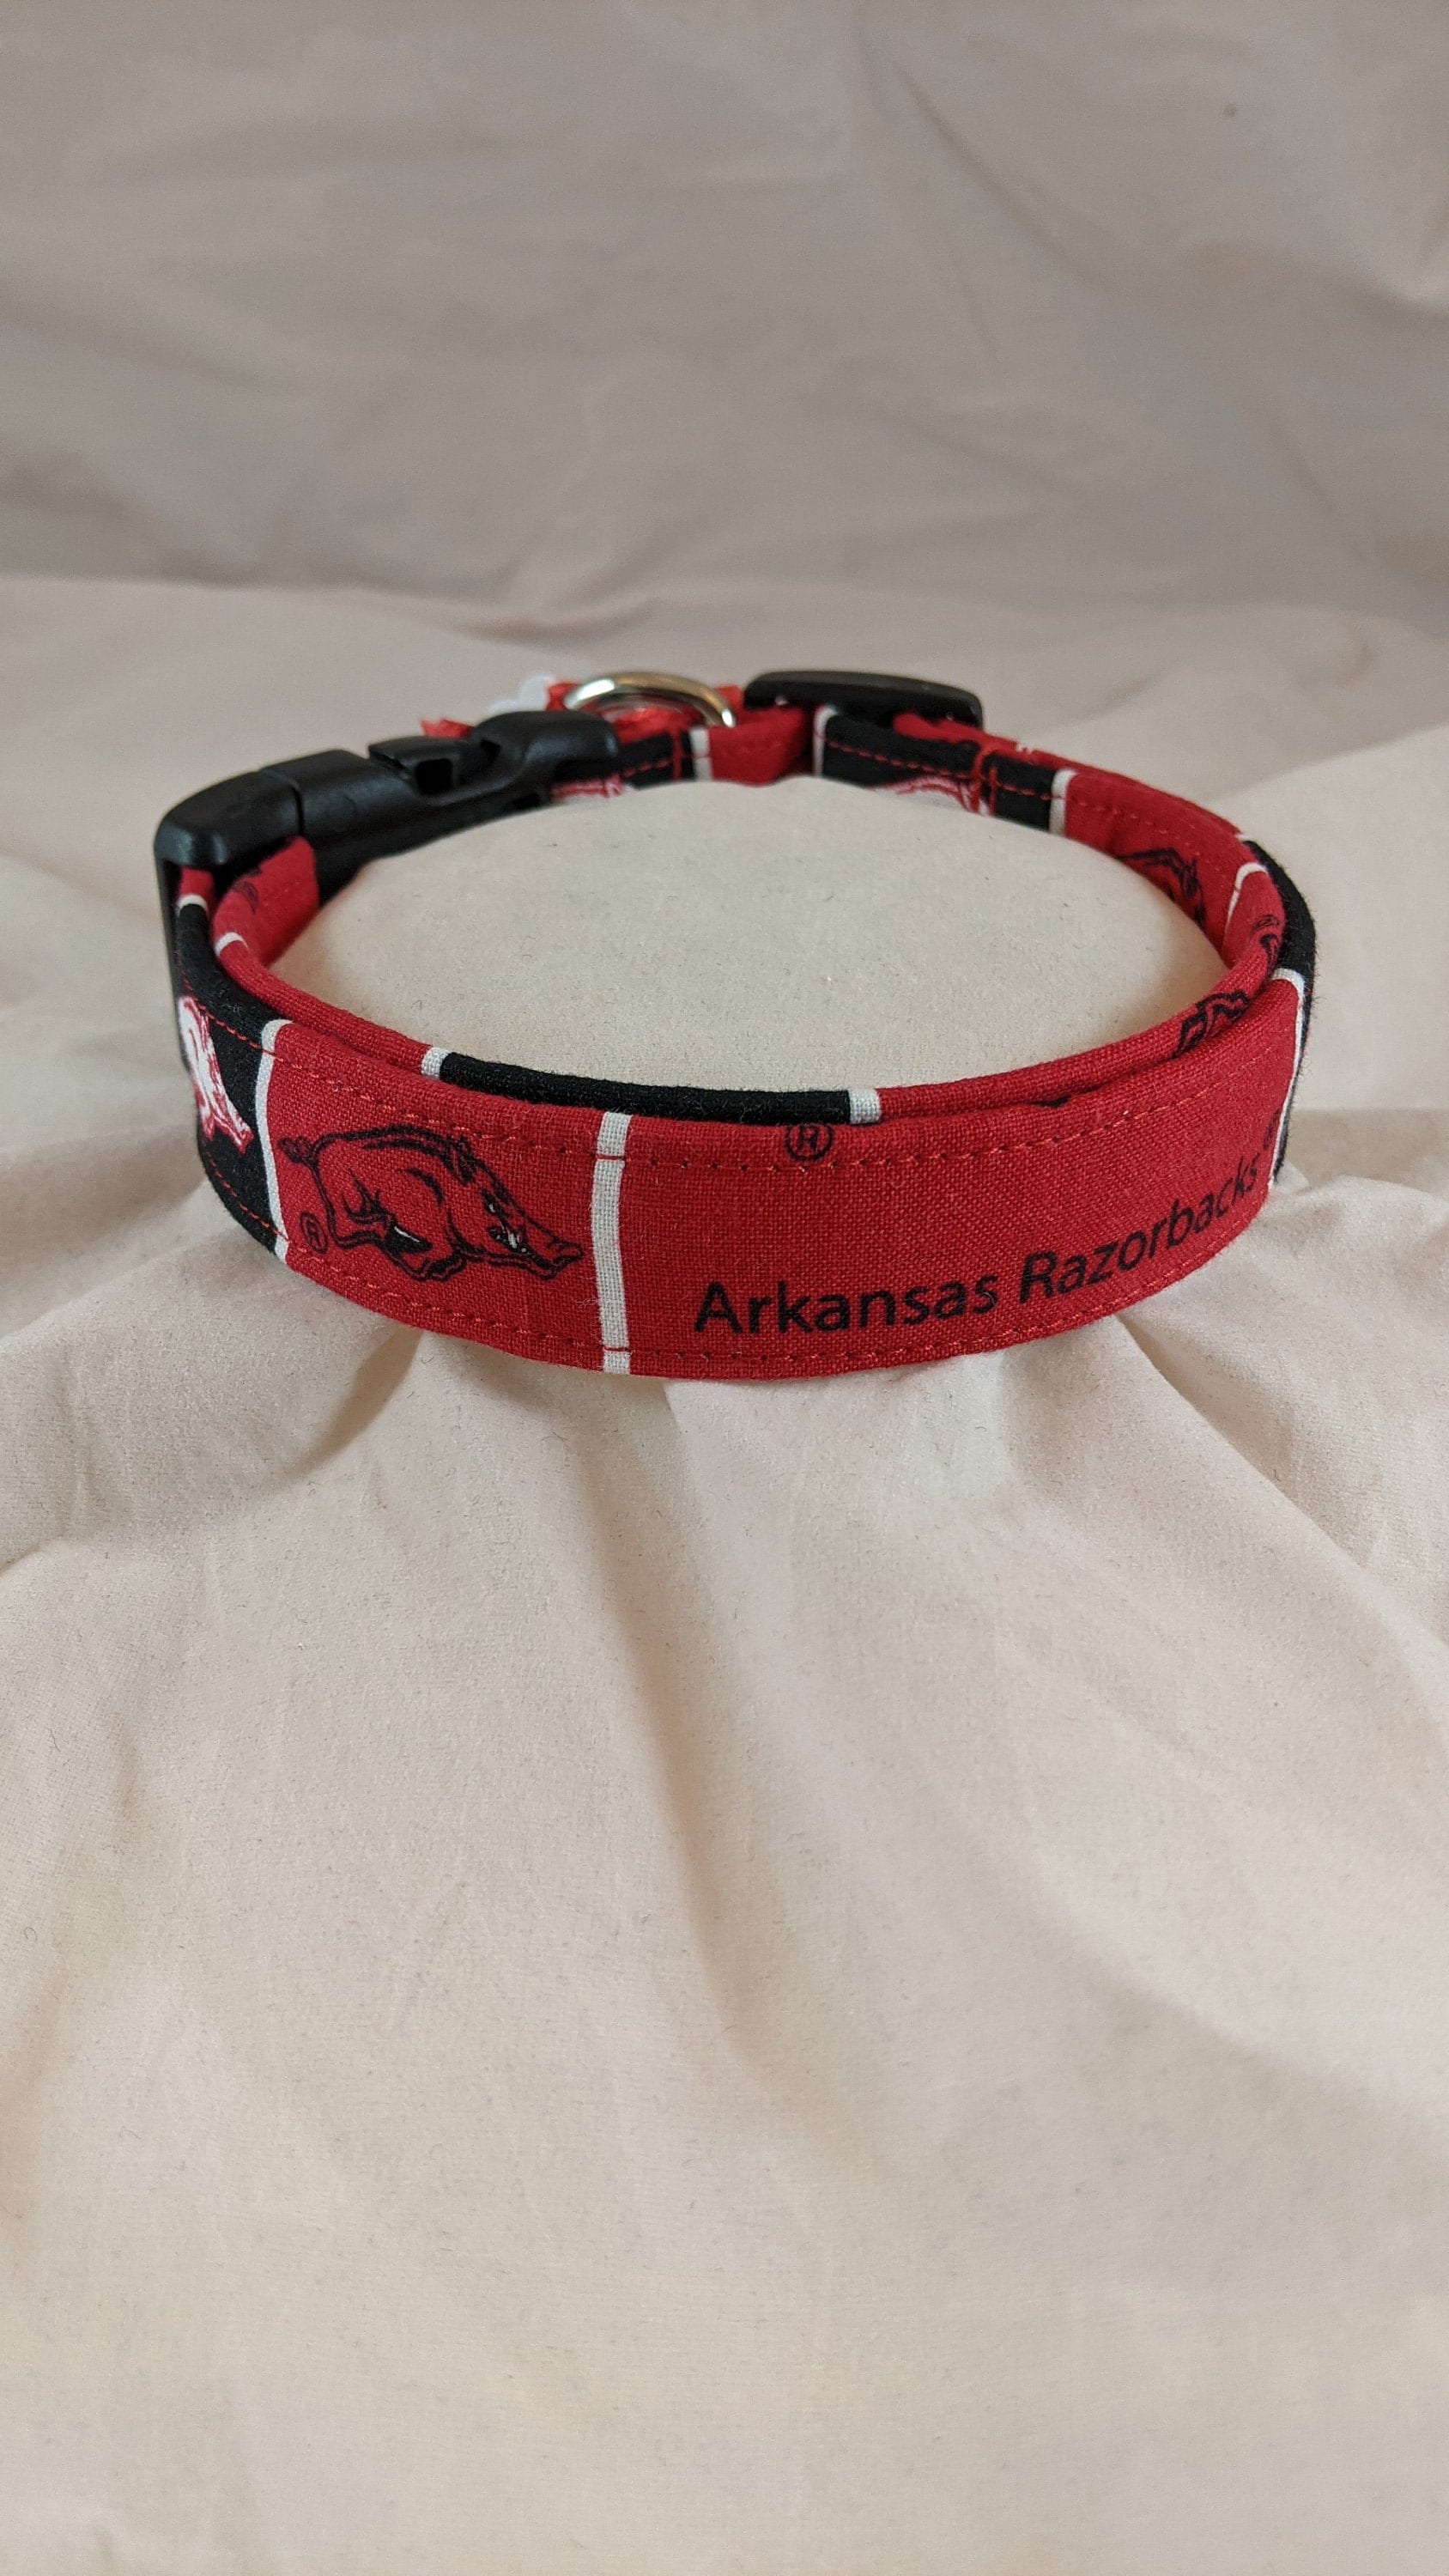 Arkansas Razorbacks Dog Jersey - Medium